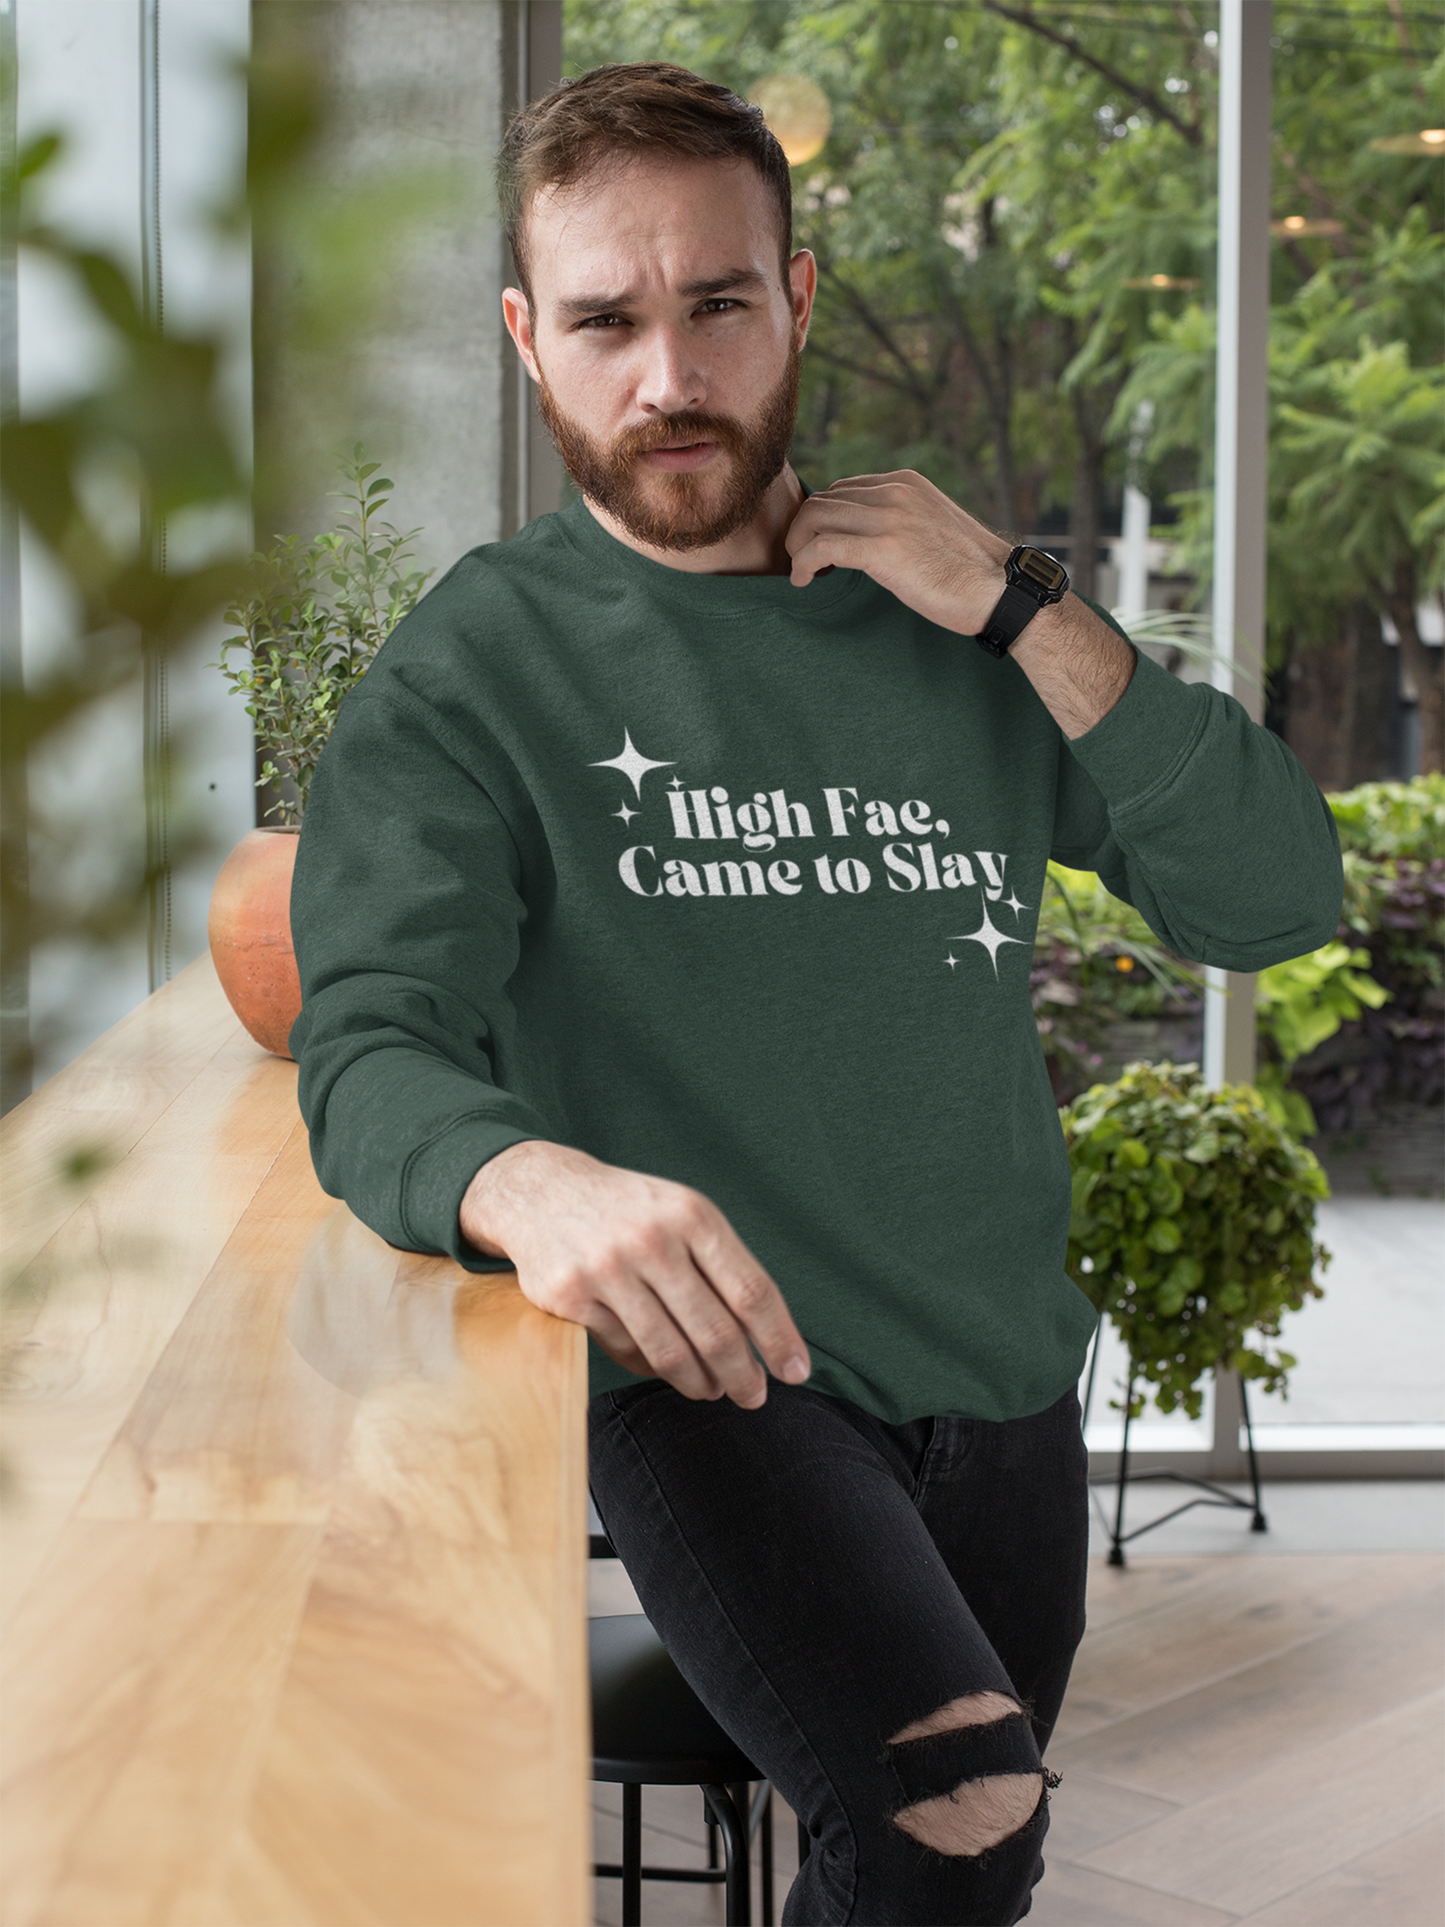 High Fae Came to Slay Sweatshirt